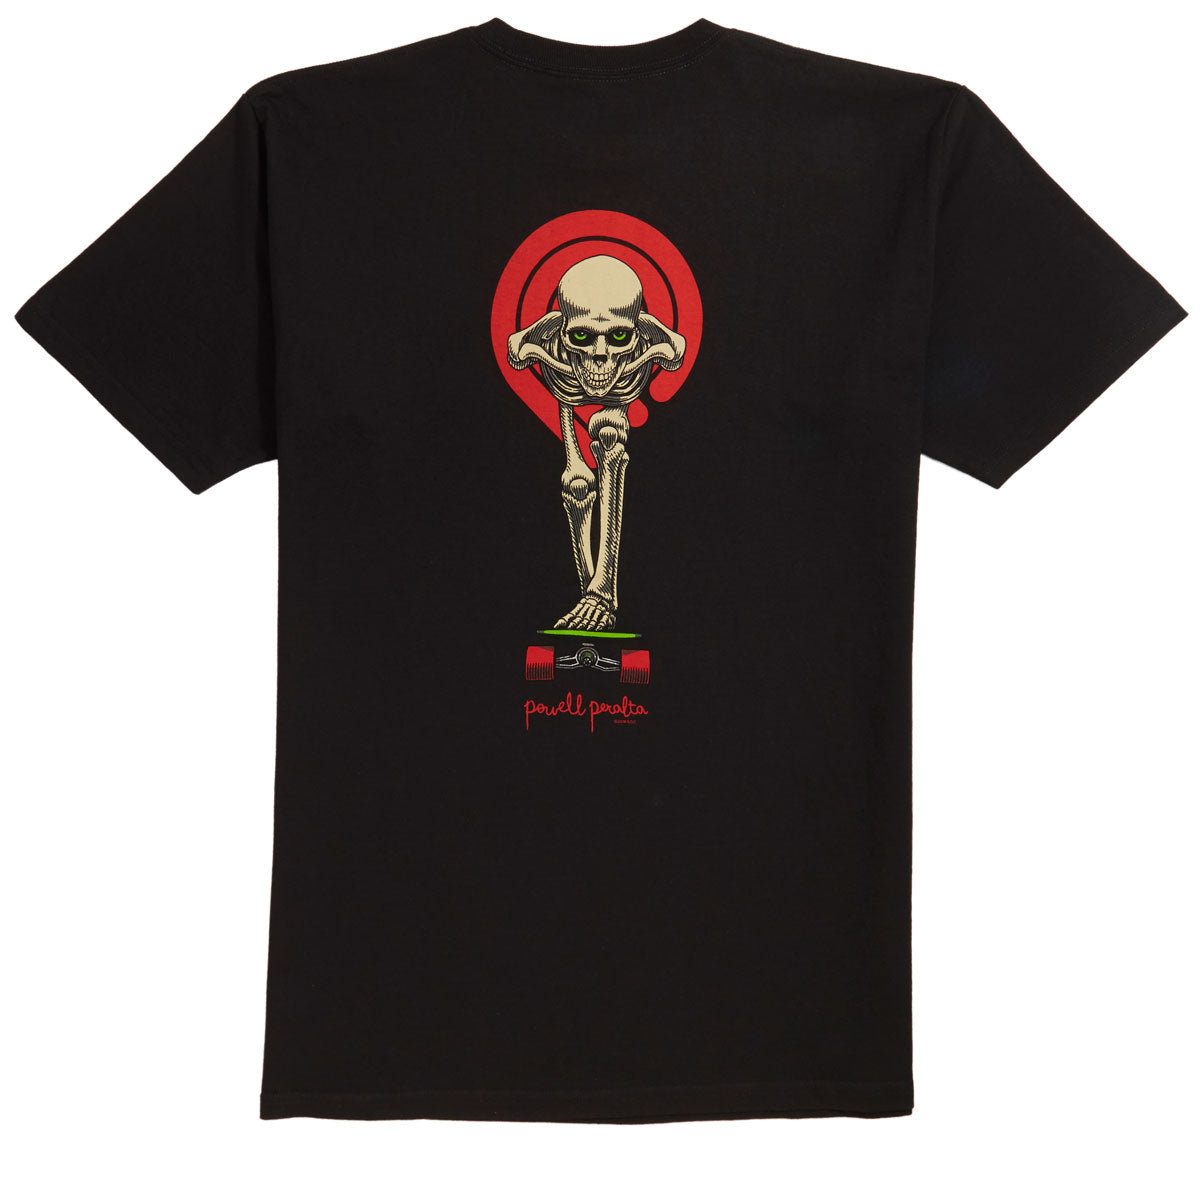 Powell-Peralta Tucking Skeleton T-Shirt - Black image 1